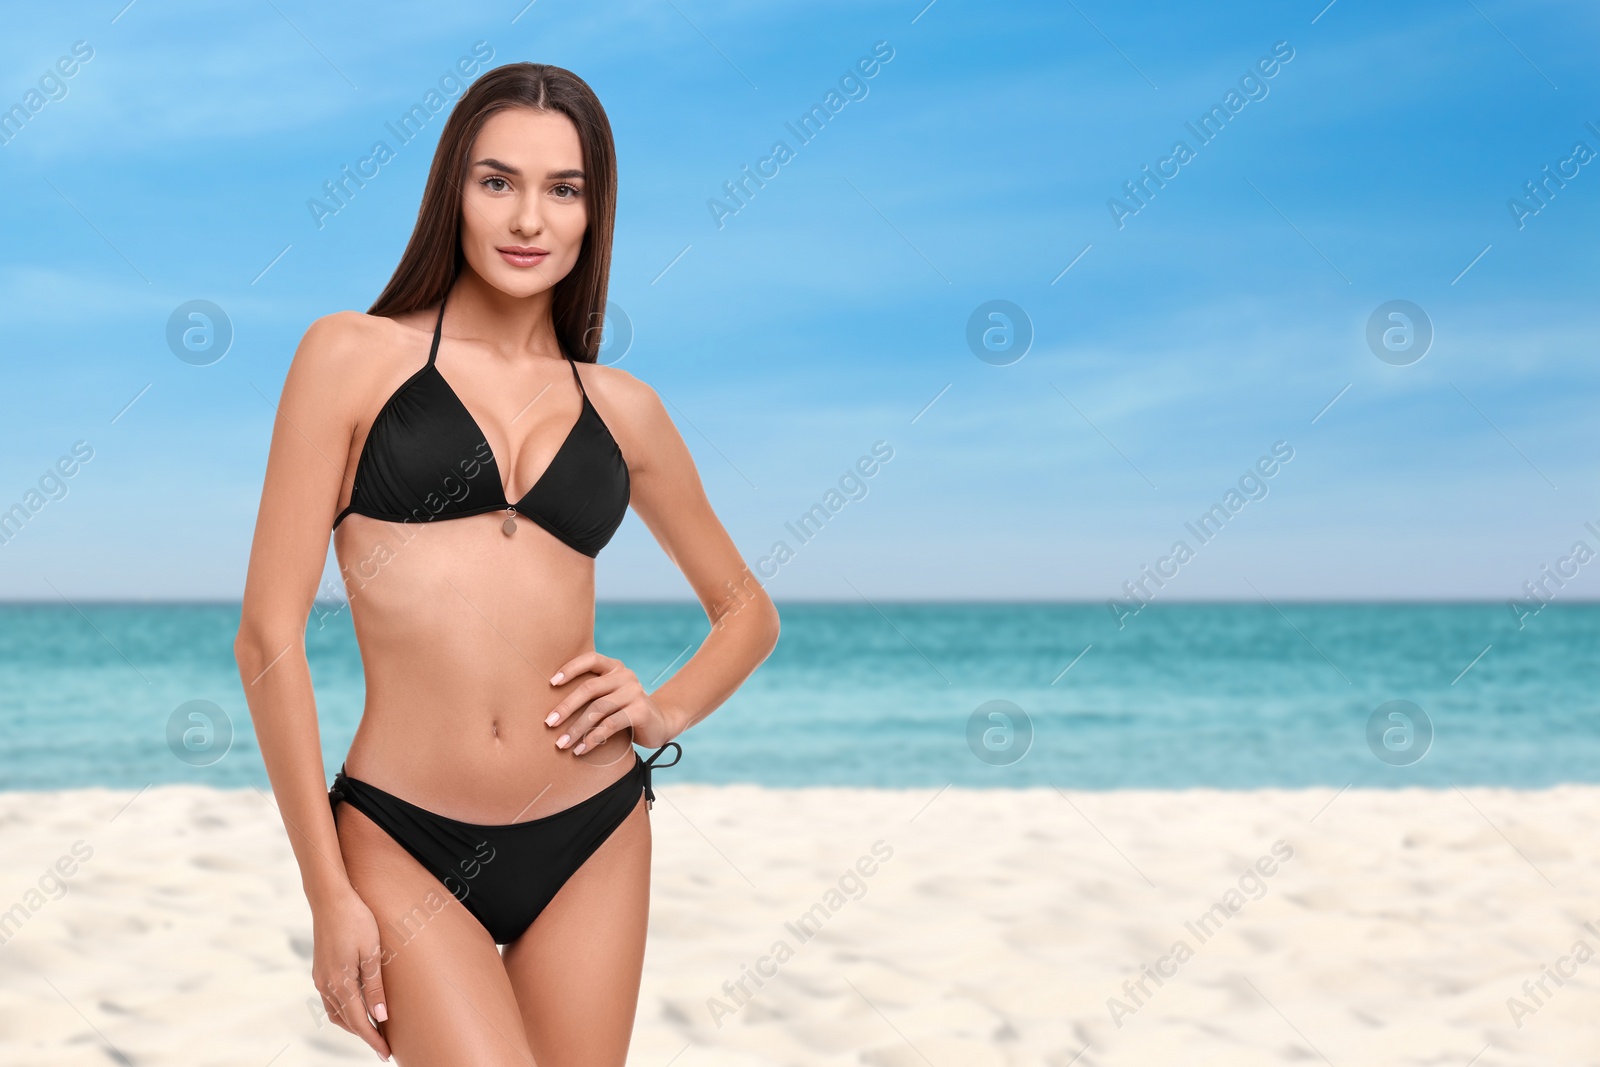 Image of Beautiful woman in stylish black bikini on sandy beach near sea, space for text